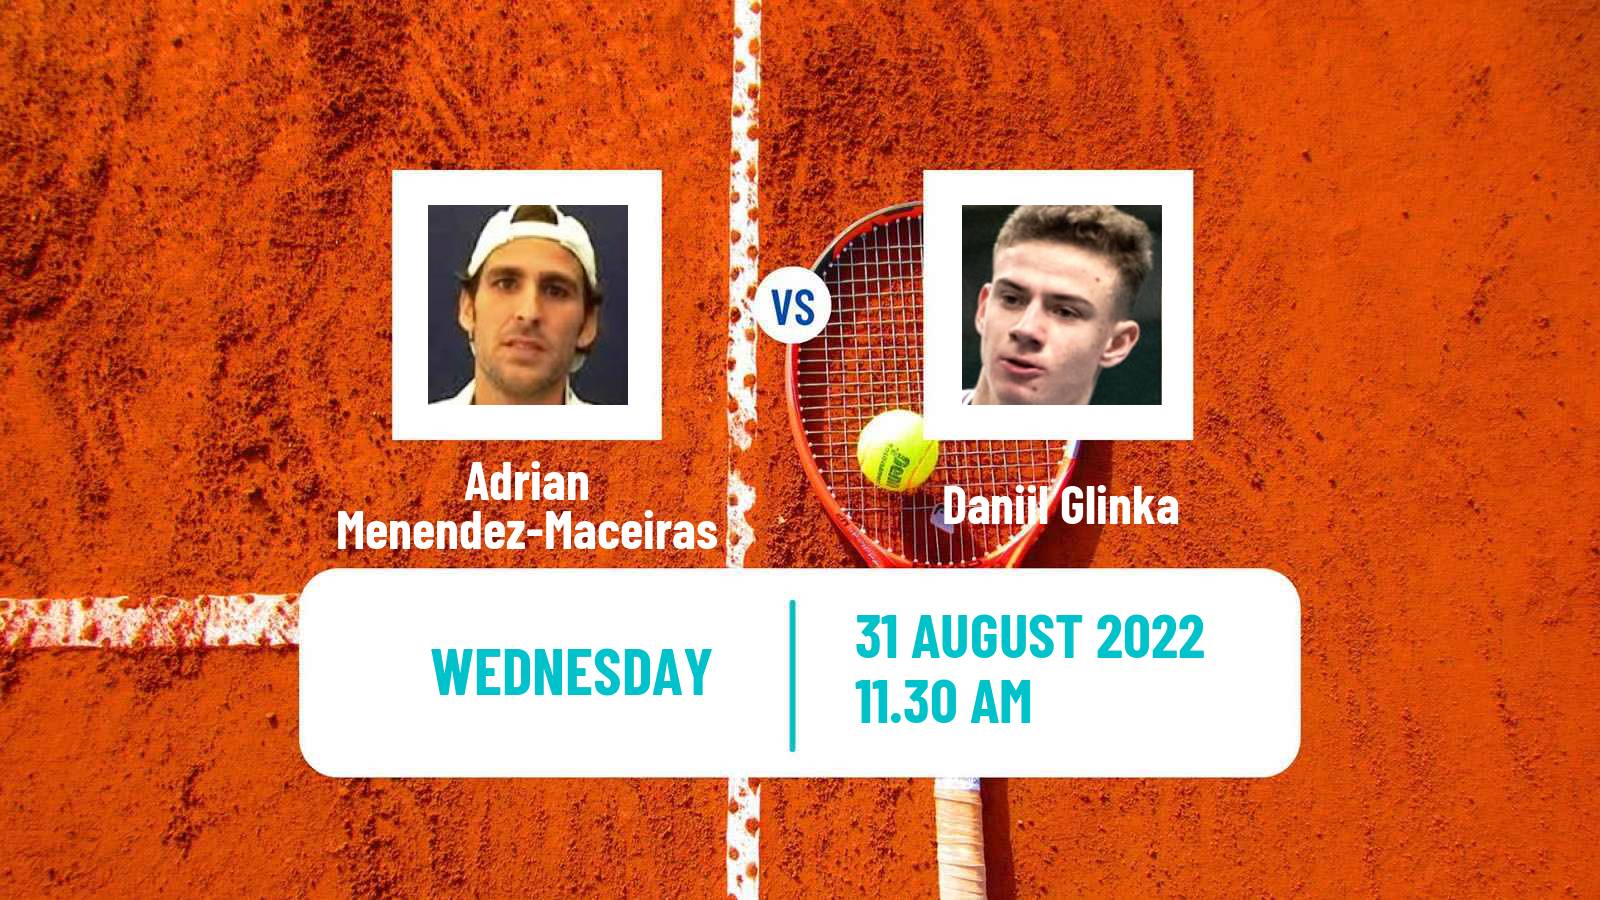 Tennis ATP Challenger Adrian Menendez-Maceiras - Daniil Glinka